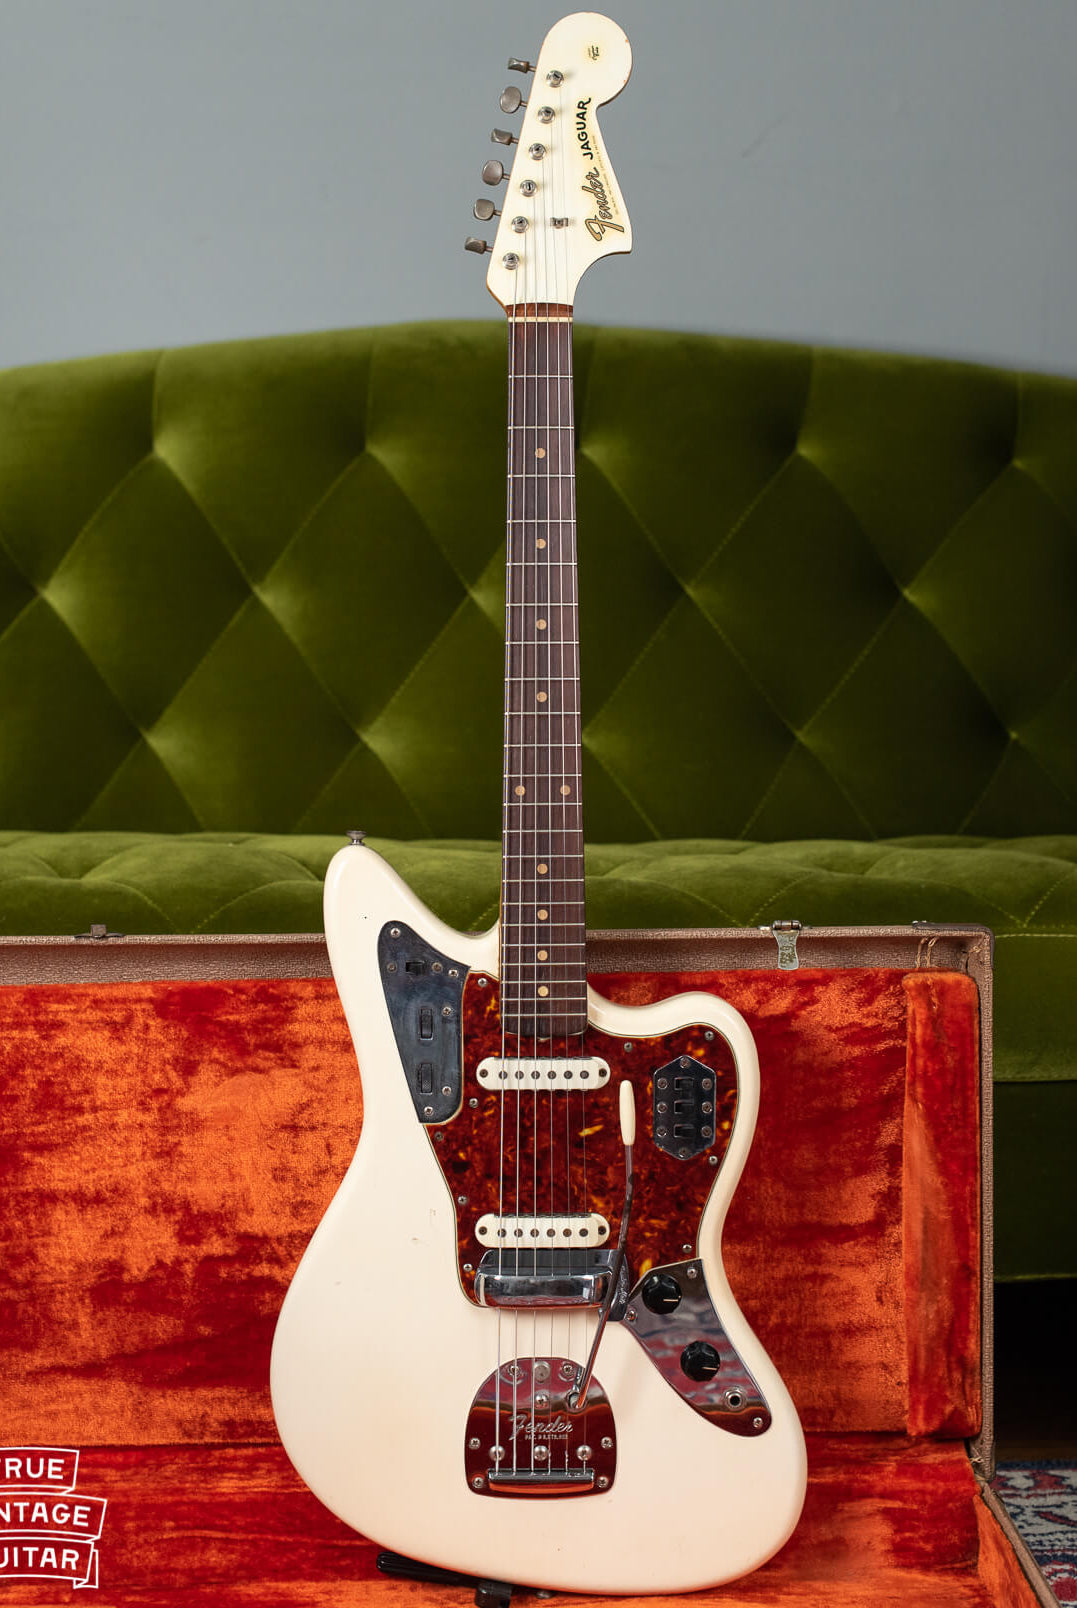 How to date a Fender Jaguar guitar 1960s 1970s